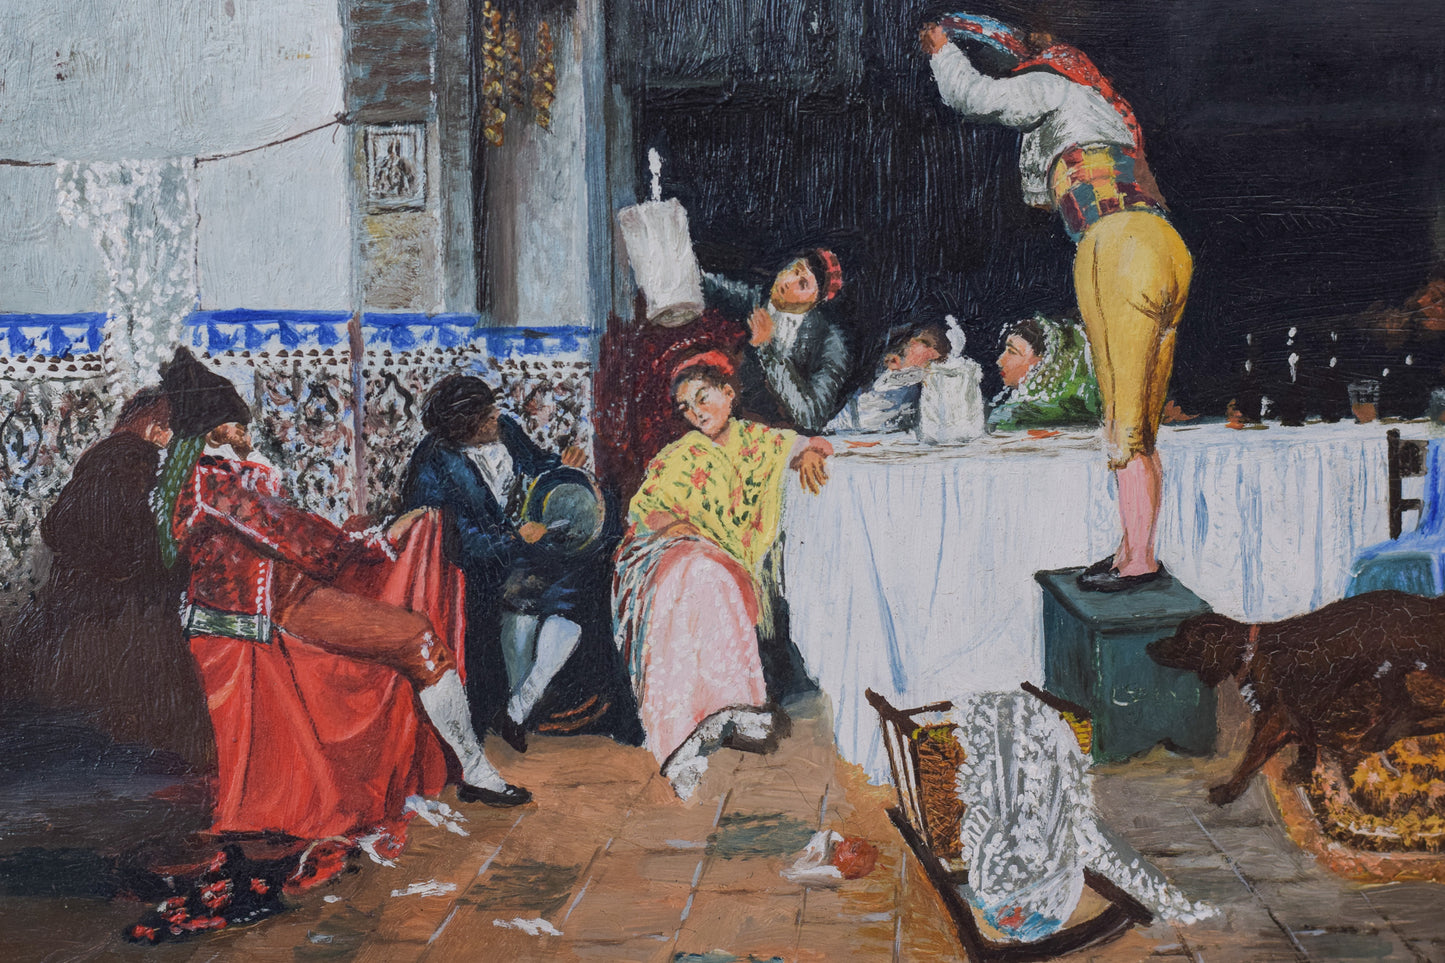 Spanish Interior Scene, "The Party"